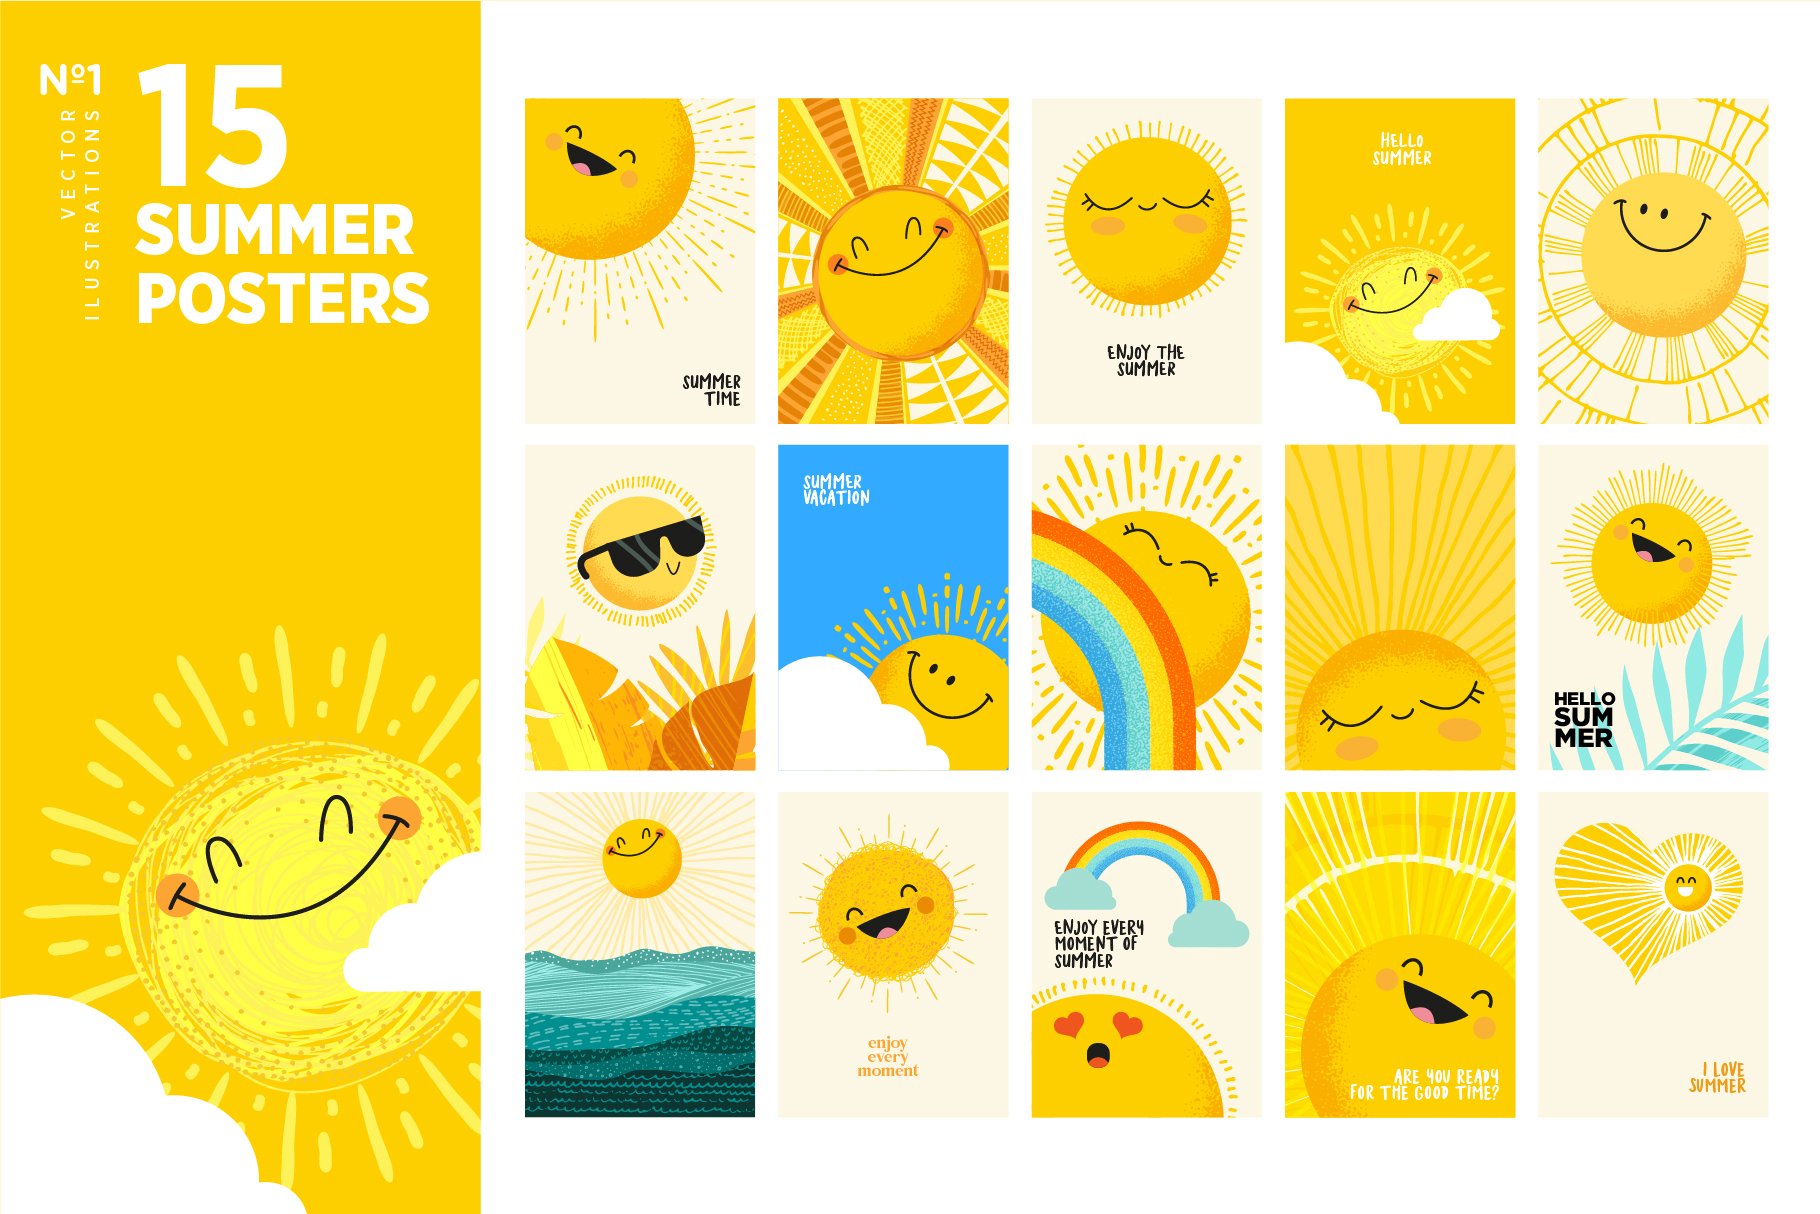 Summer Time Illustration - Design Cuts